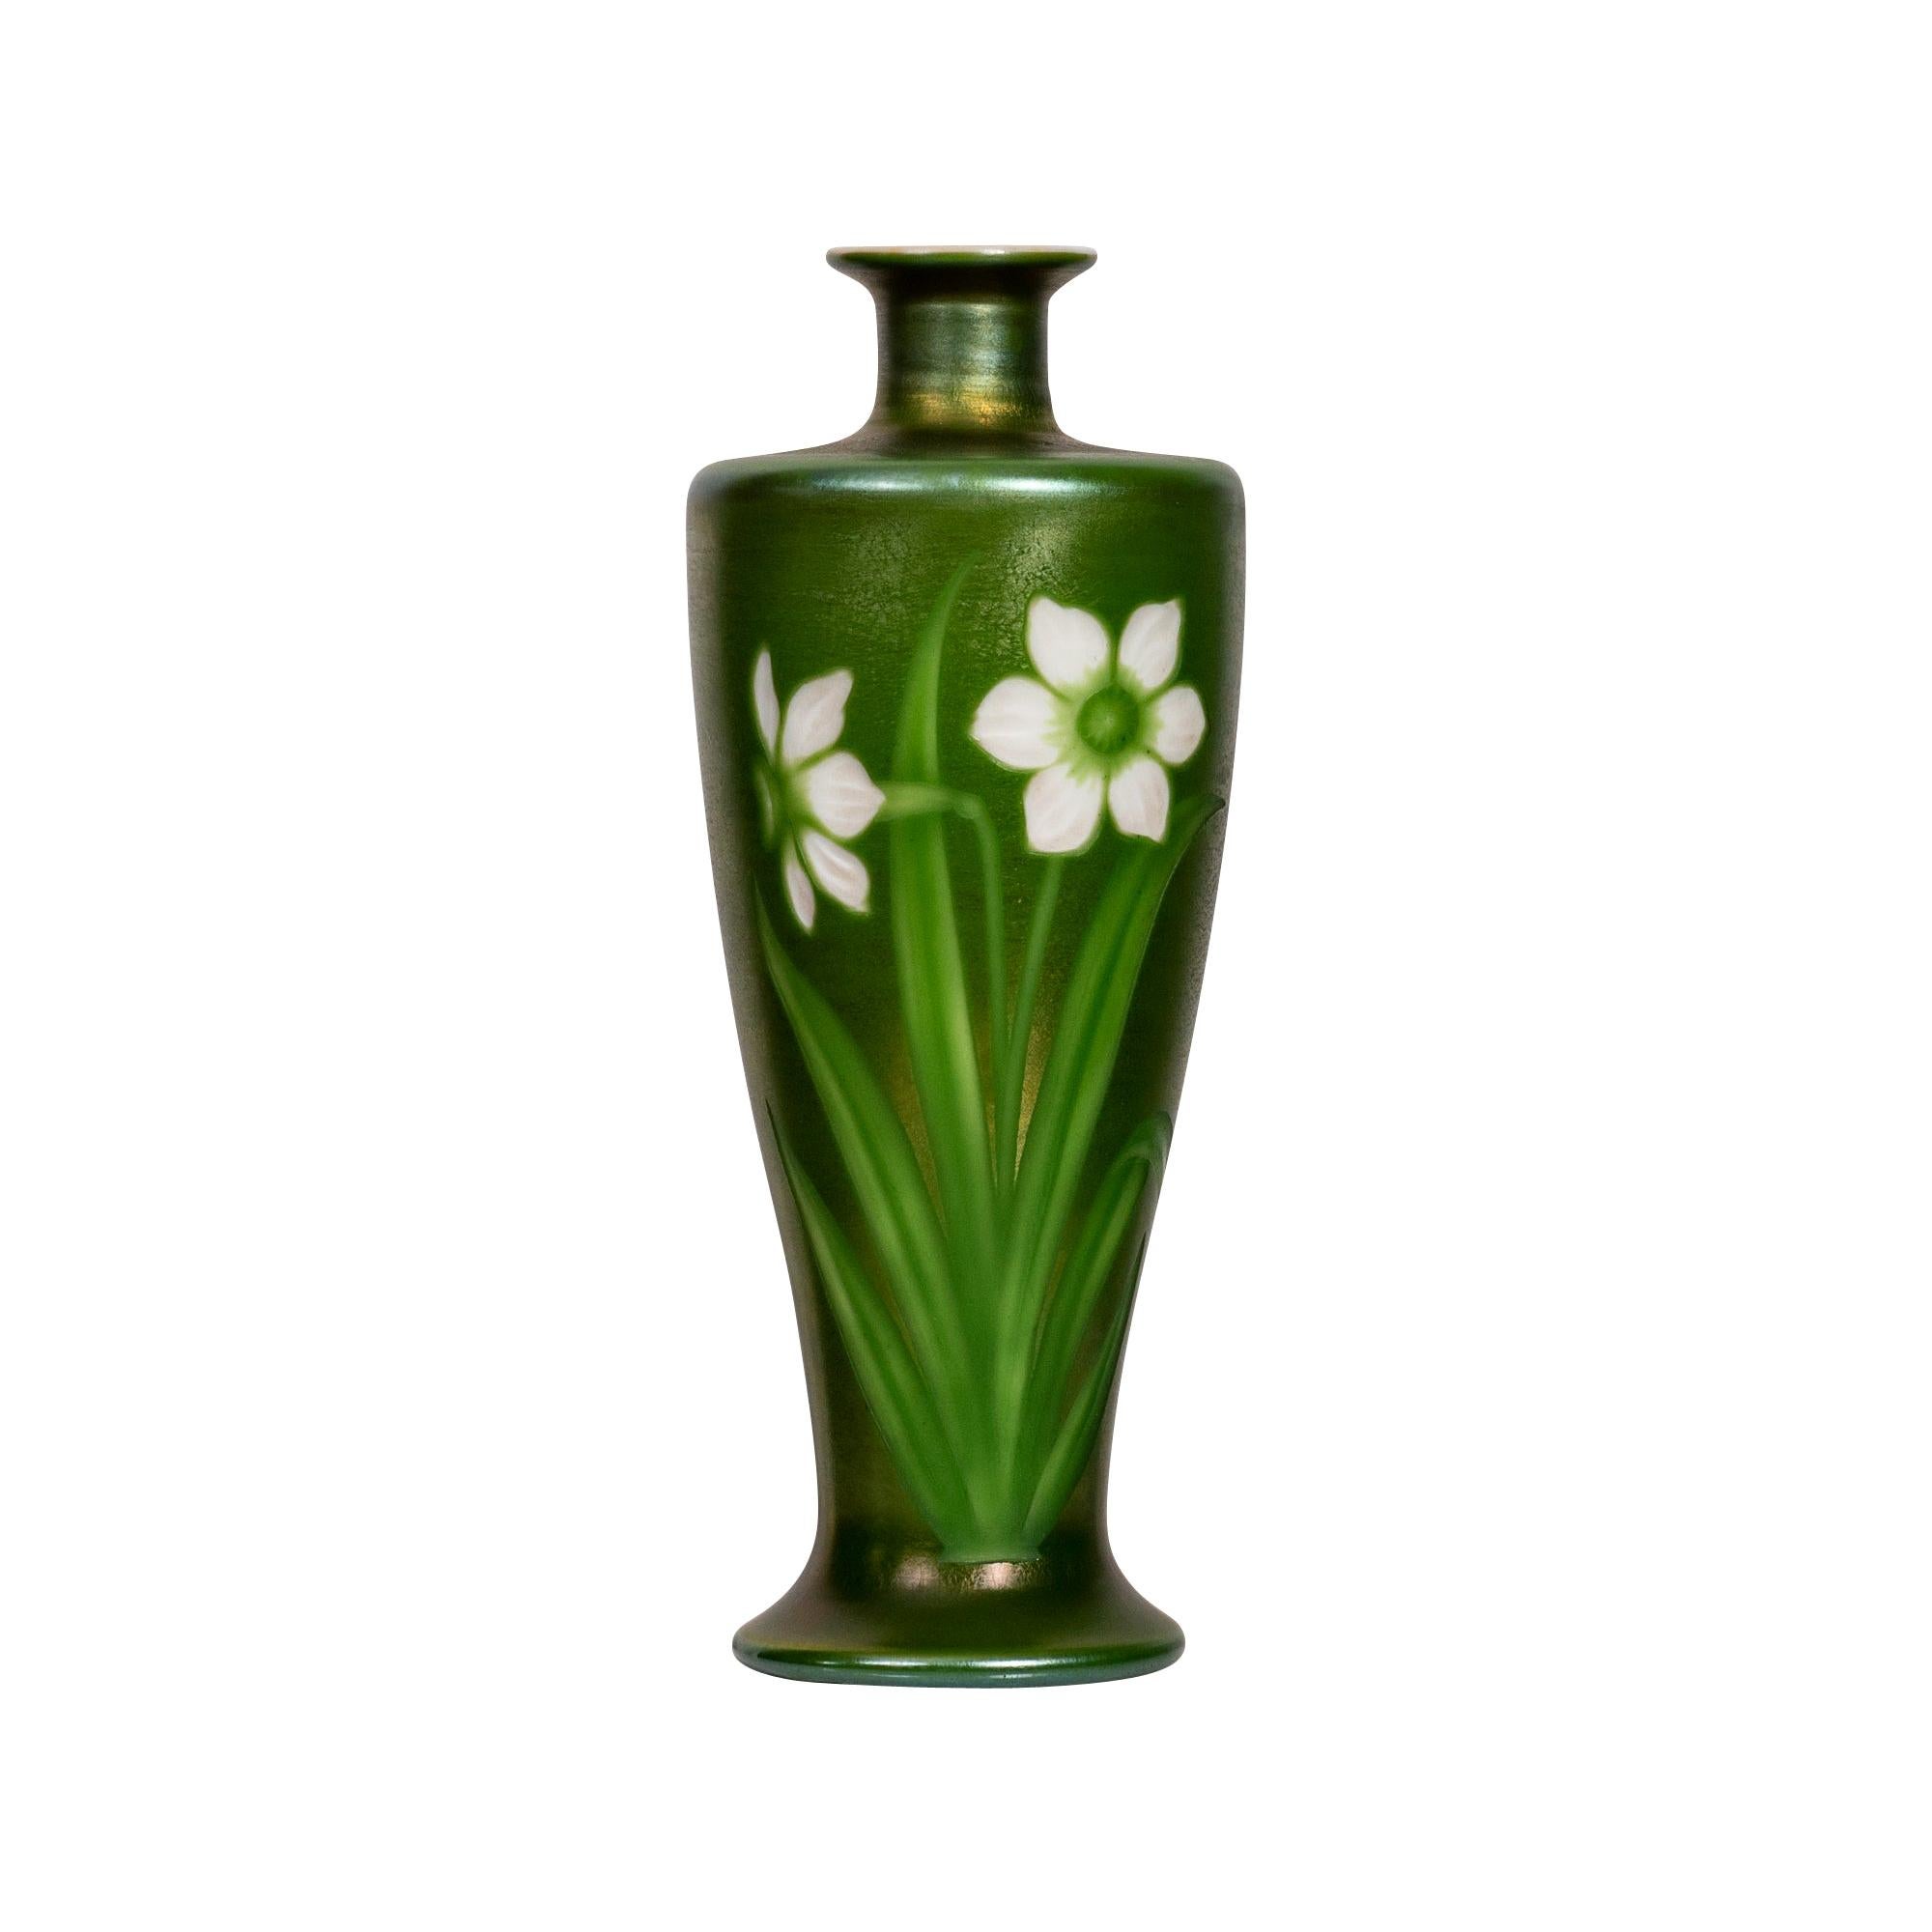 Tiffany Studios Carved Cameo "Flower" Vase For Sale